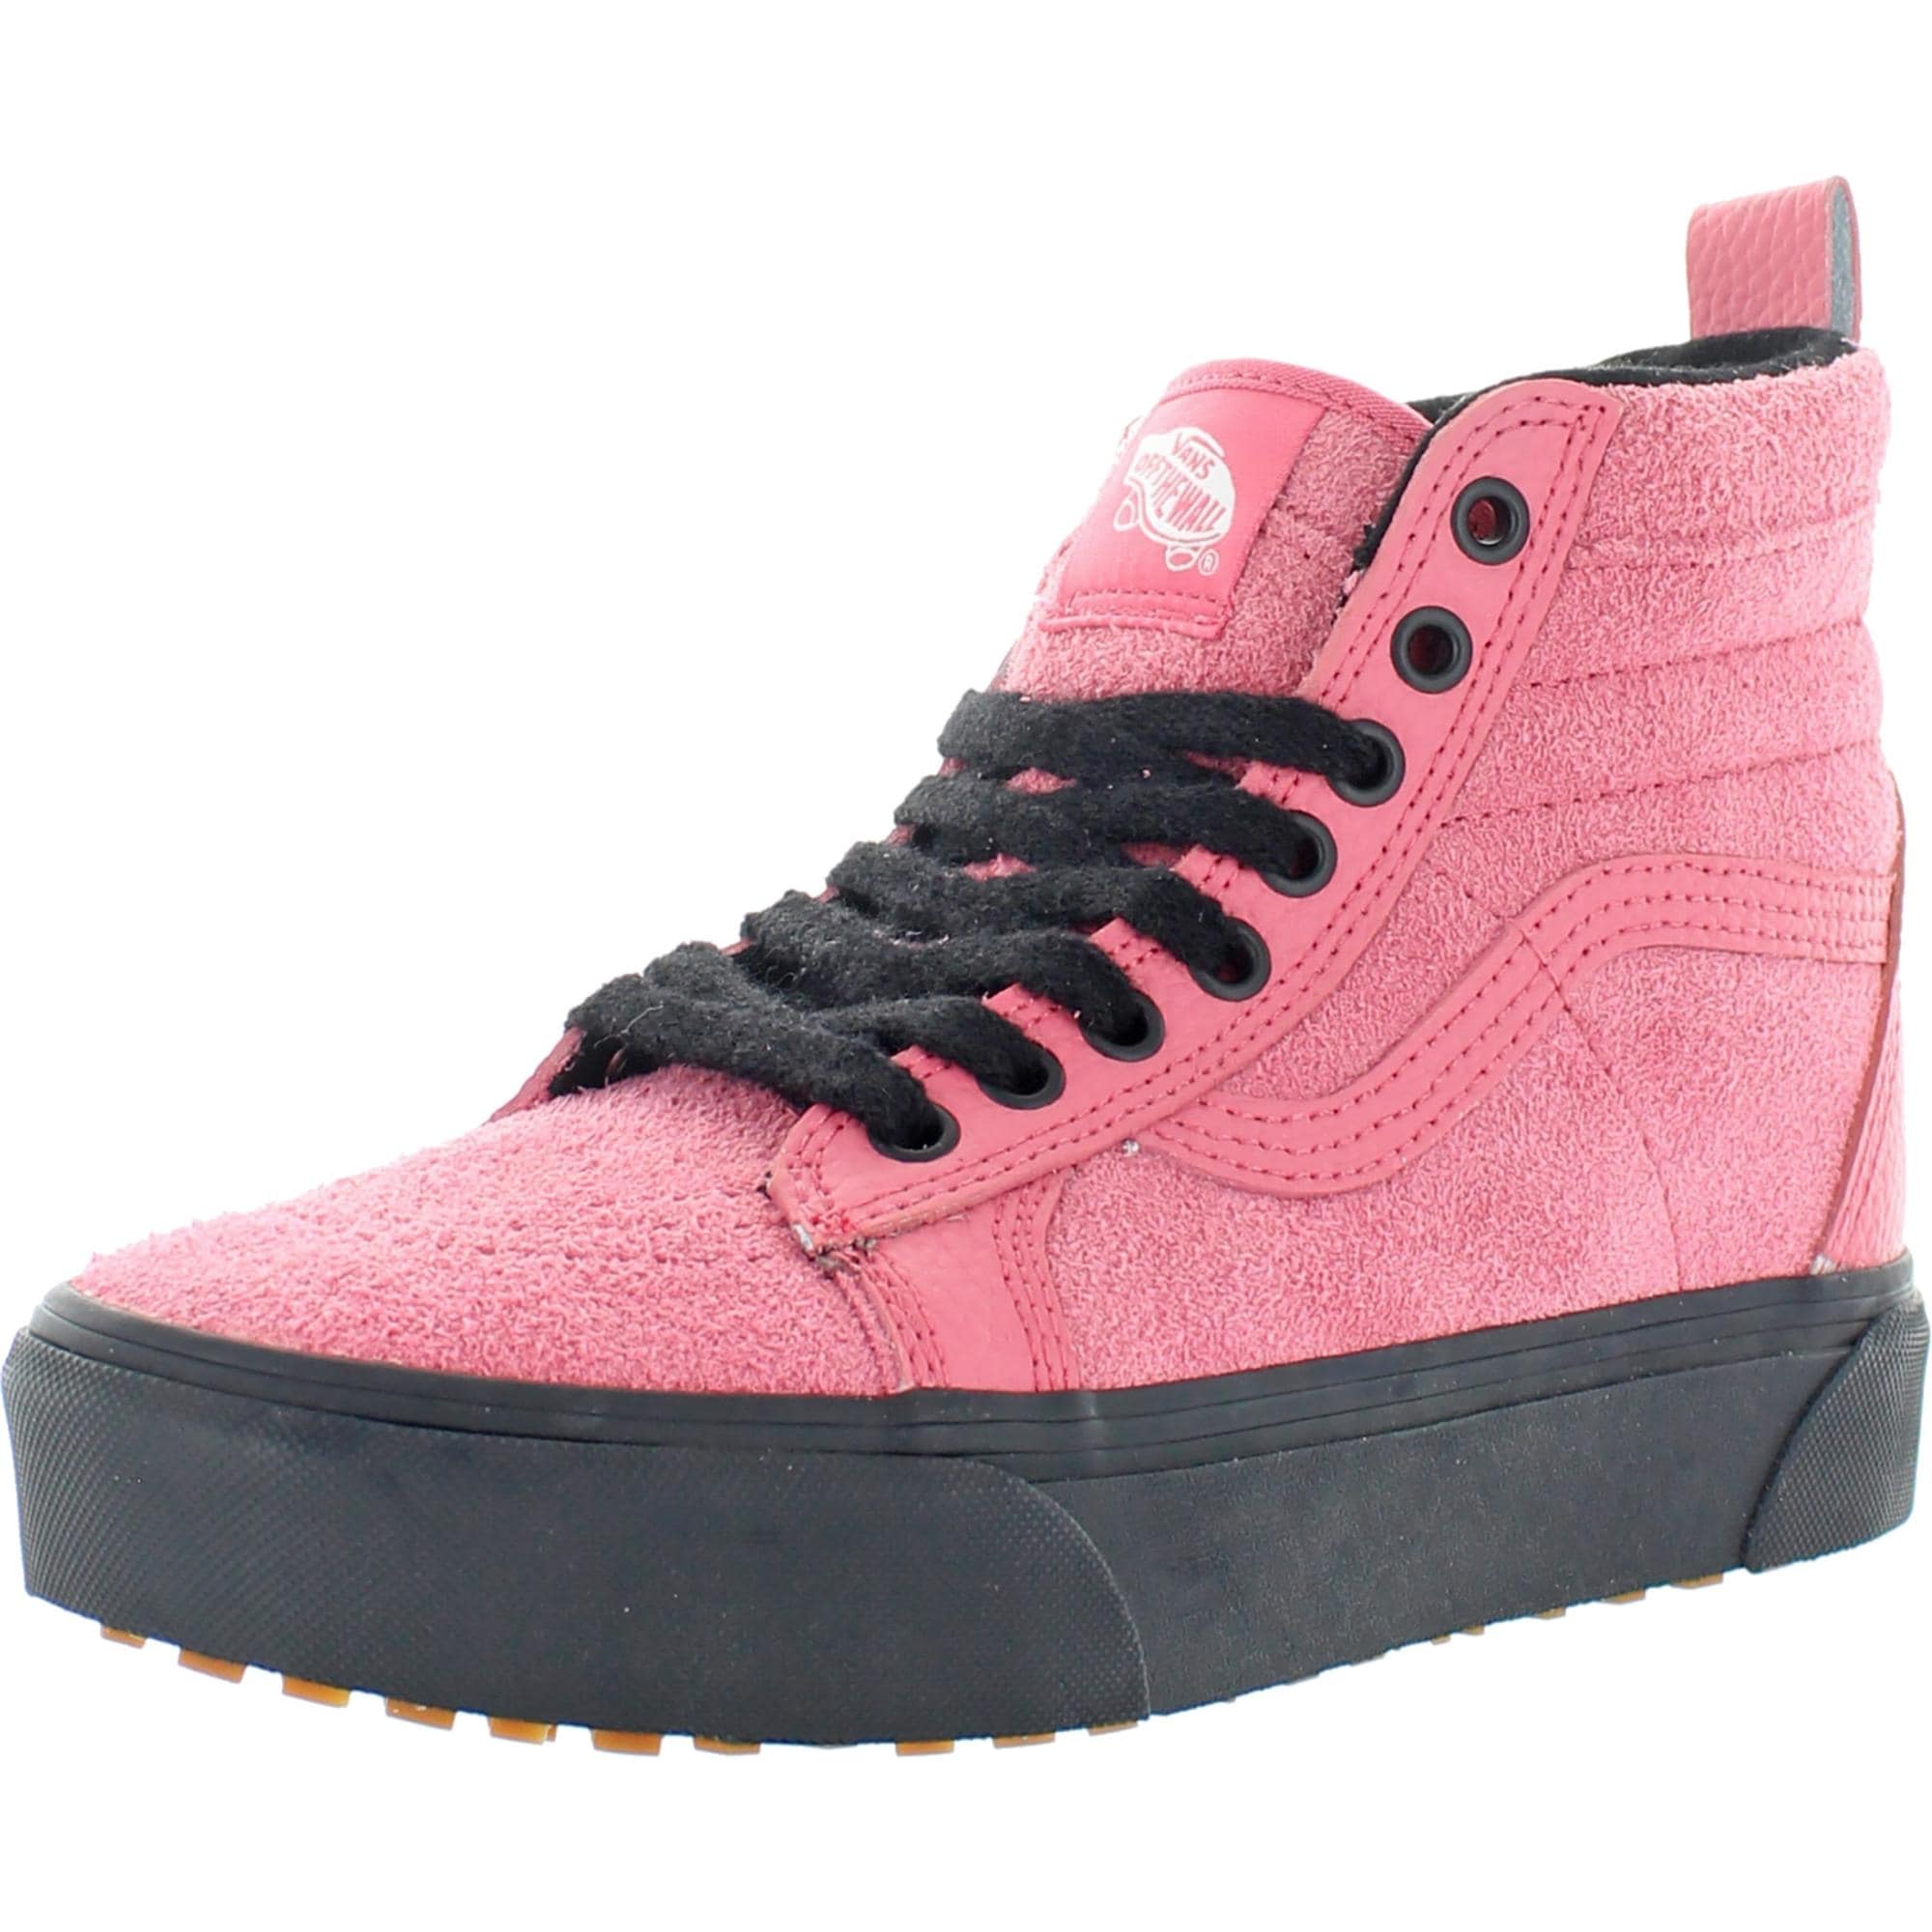 mens pink high top sneakers